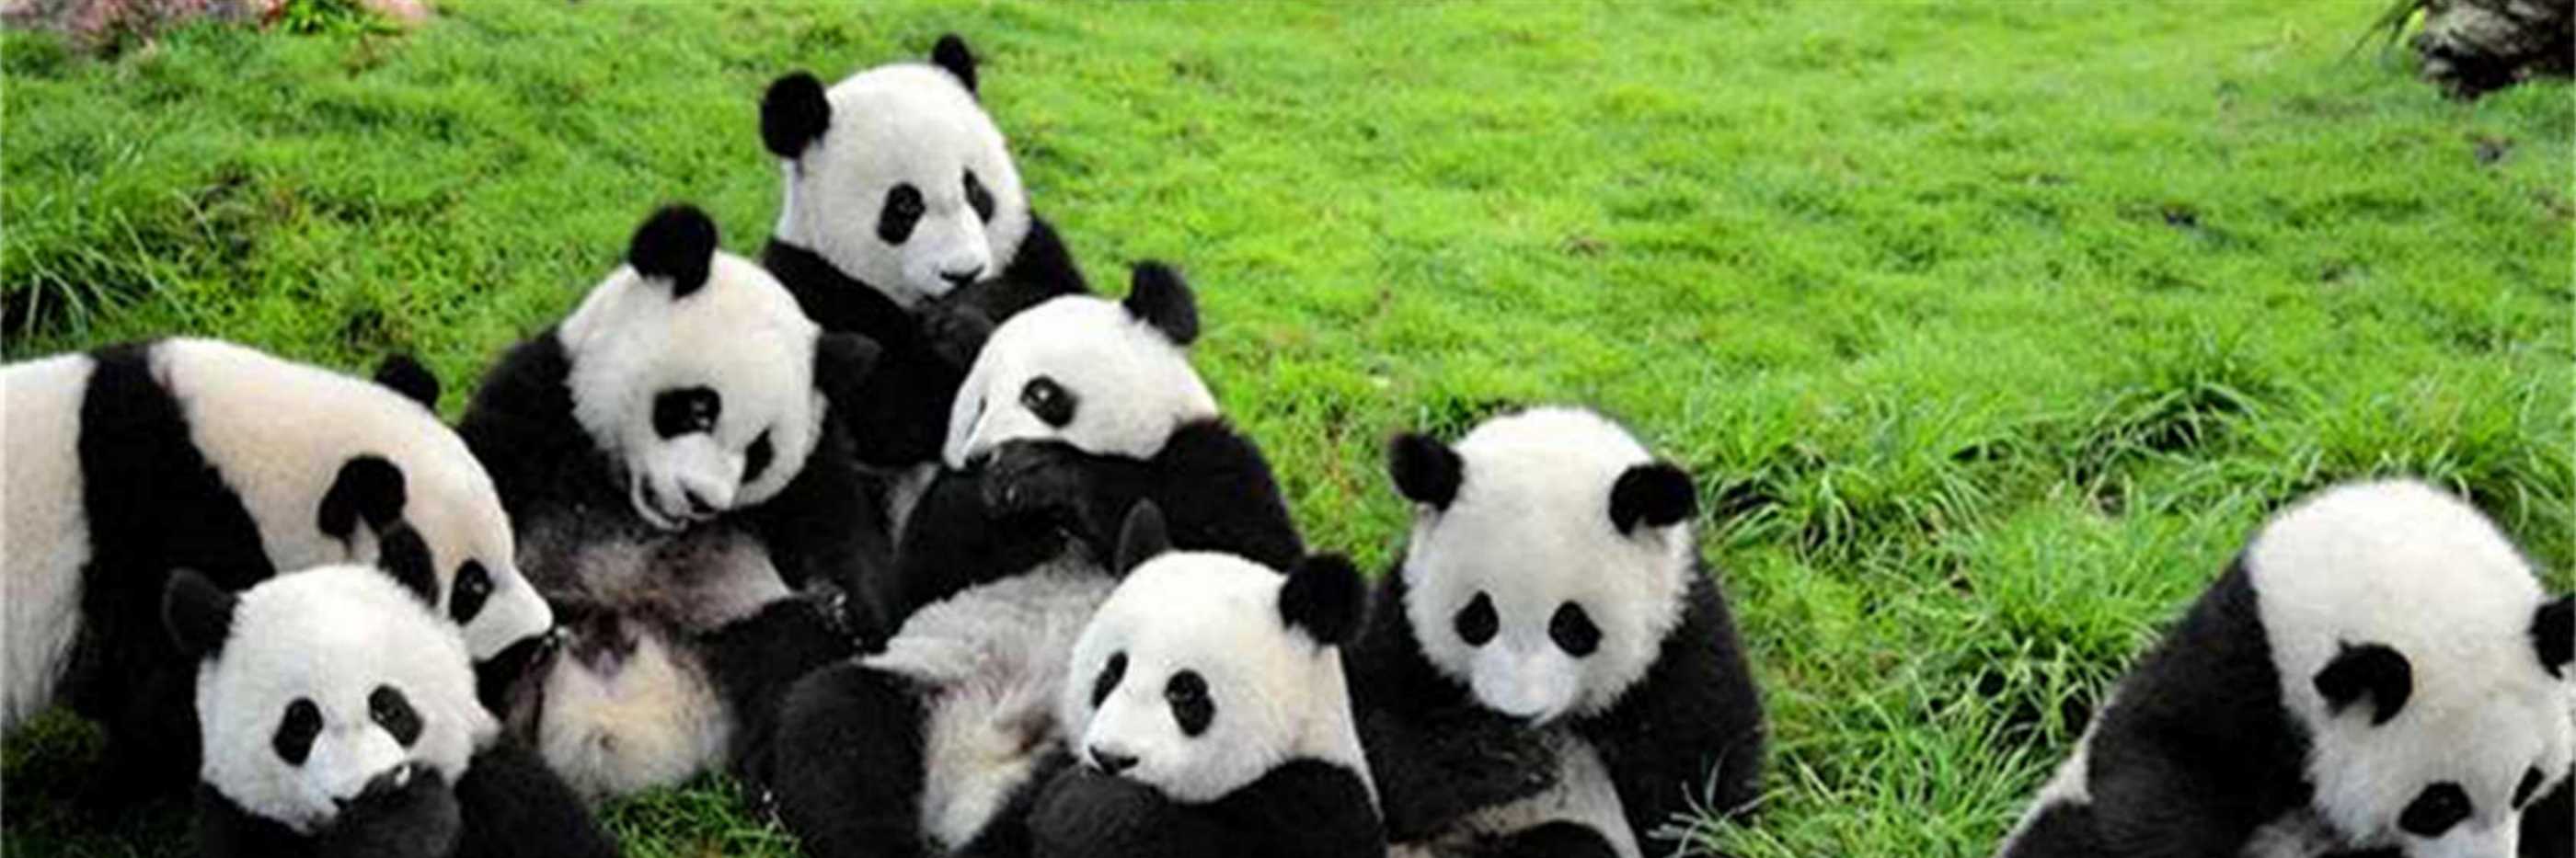 Chengdu Research Base of Giant Panda Breeding Tour